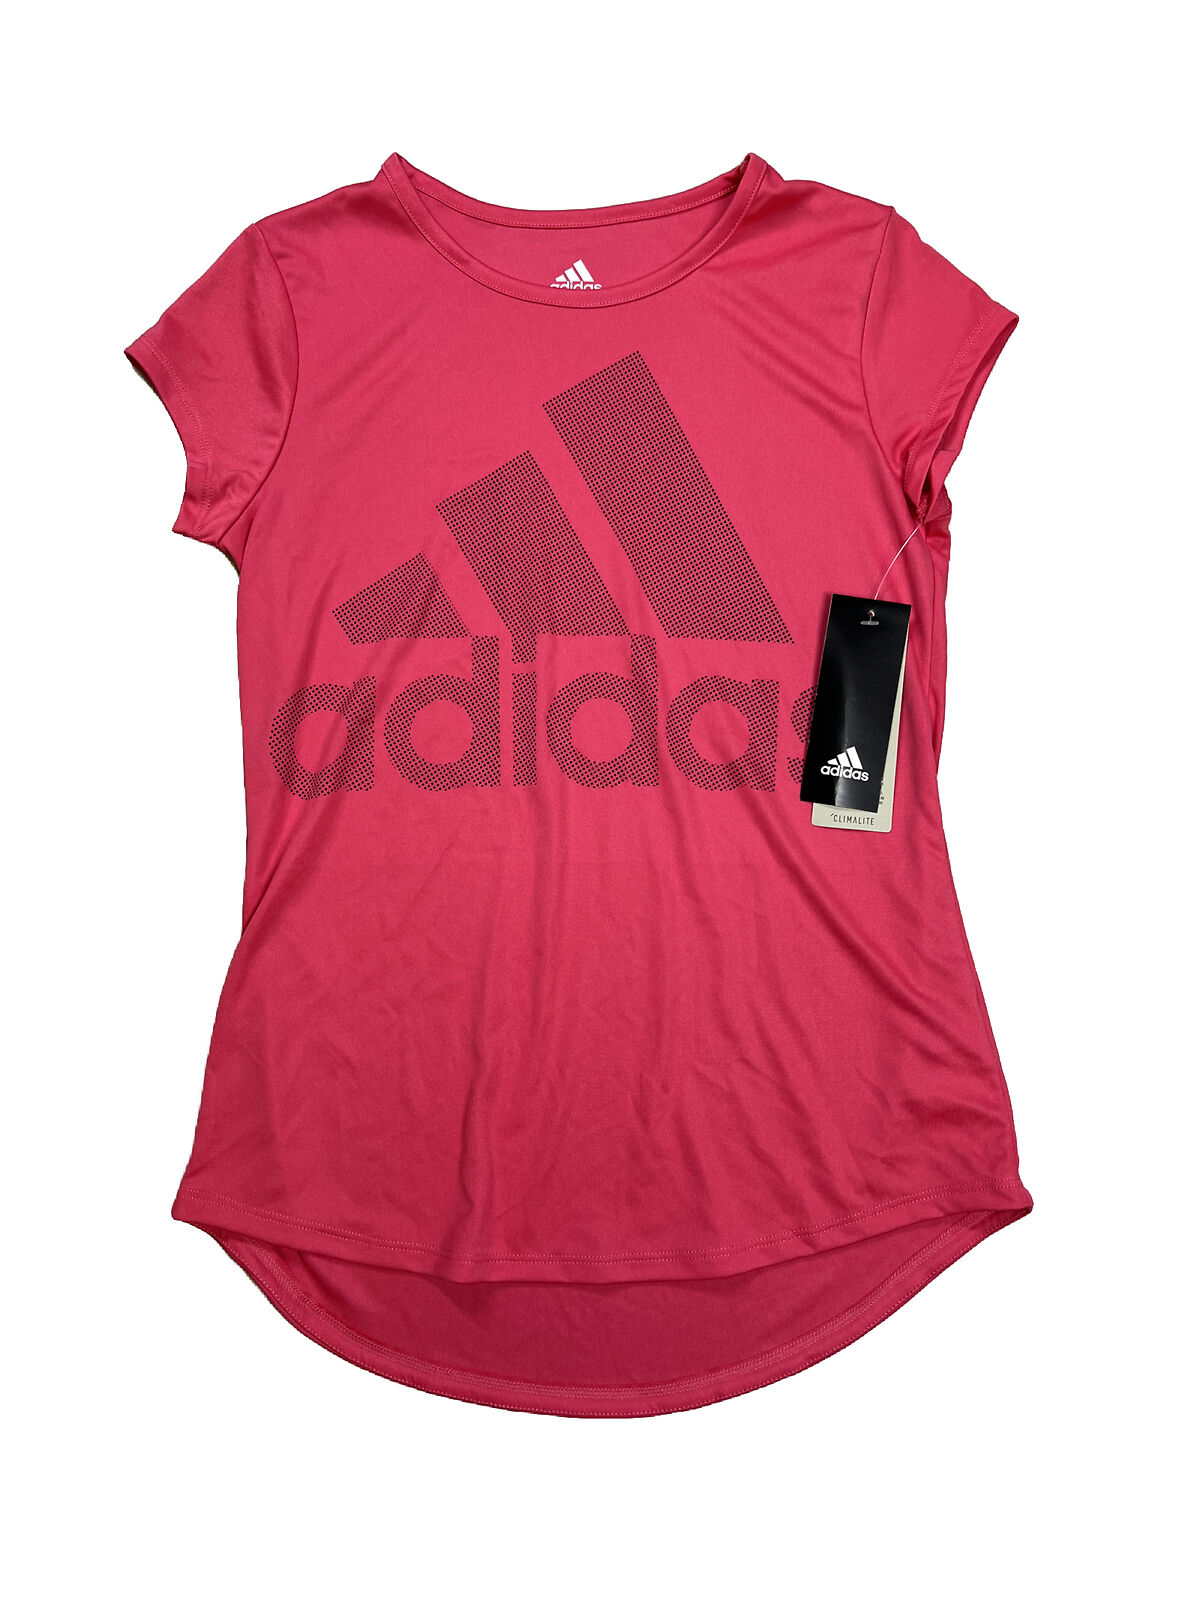 NEW adidas Girls Kids Short Sleeve Athletic Shirt - L 14